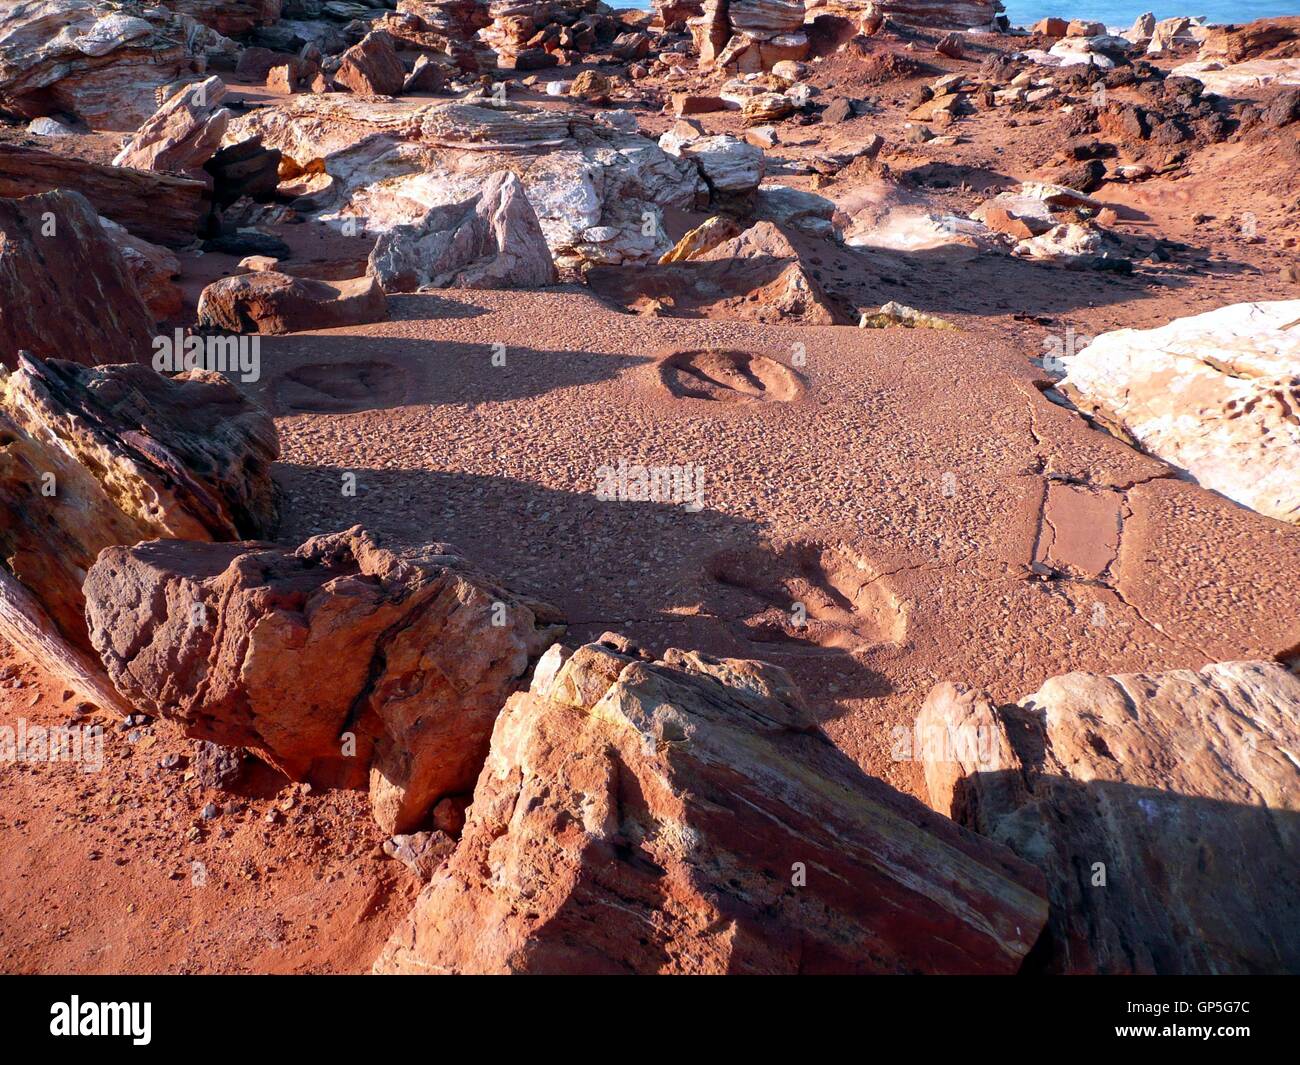 Dinosaur footprints caste in concrete Stock Photo